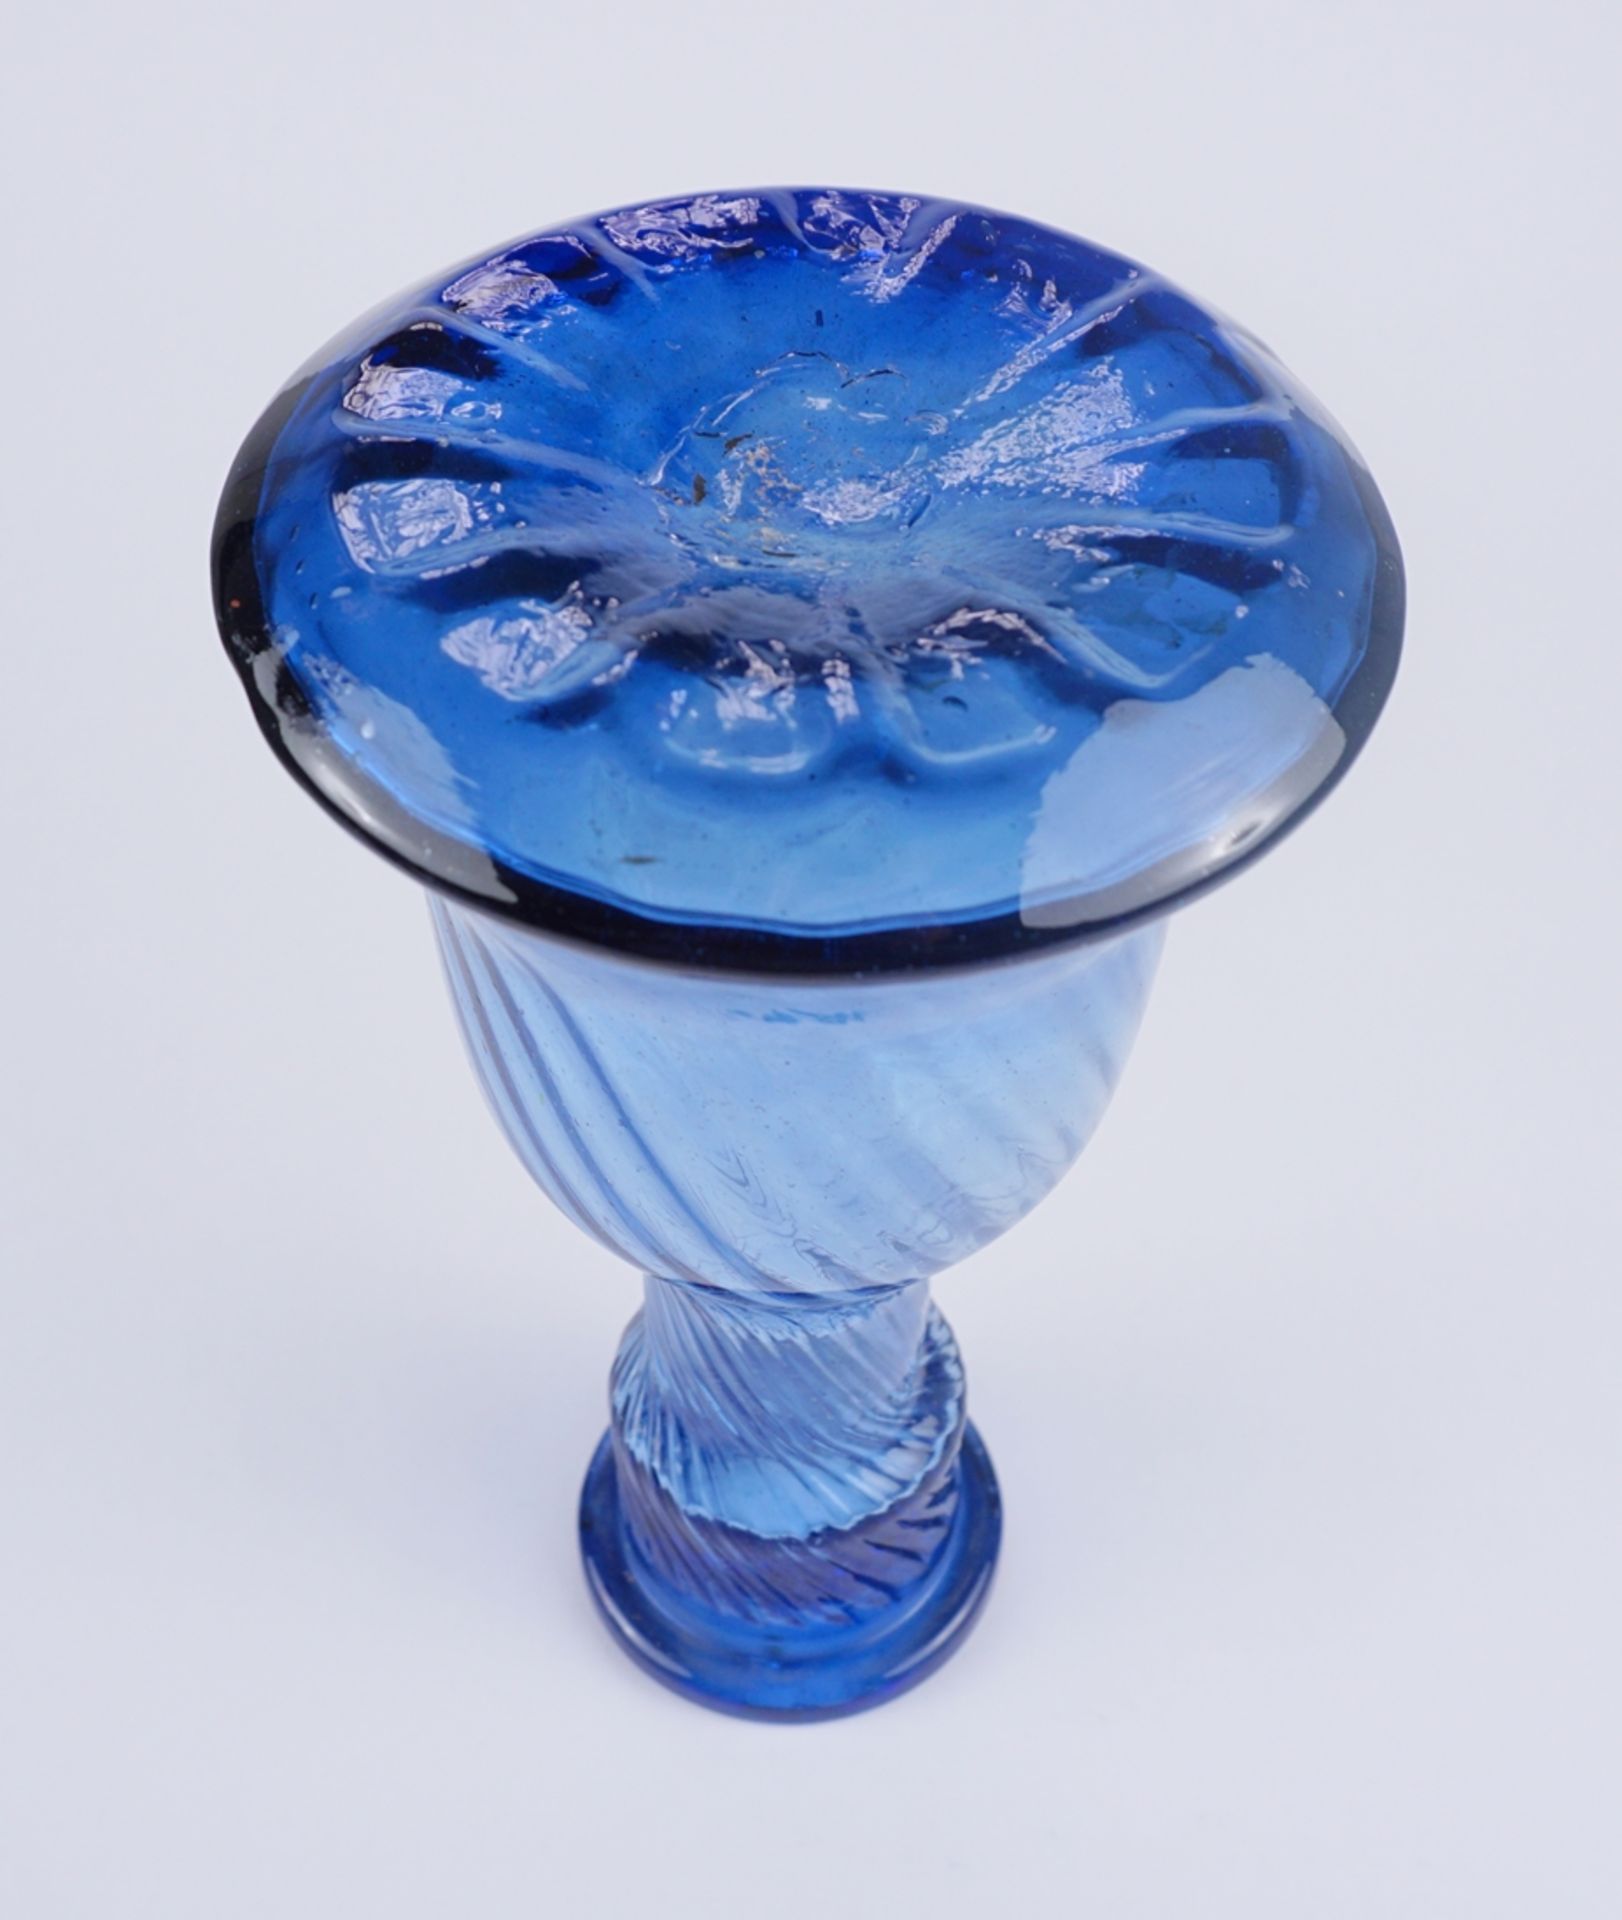 Vase aus Blauglas, 19.Jh. - Image 2 of 2